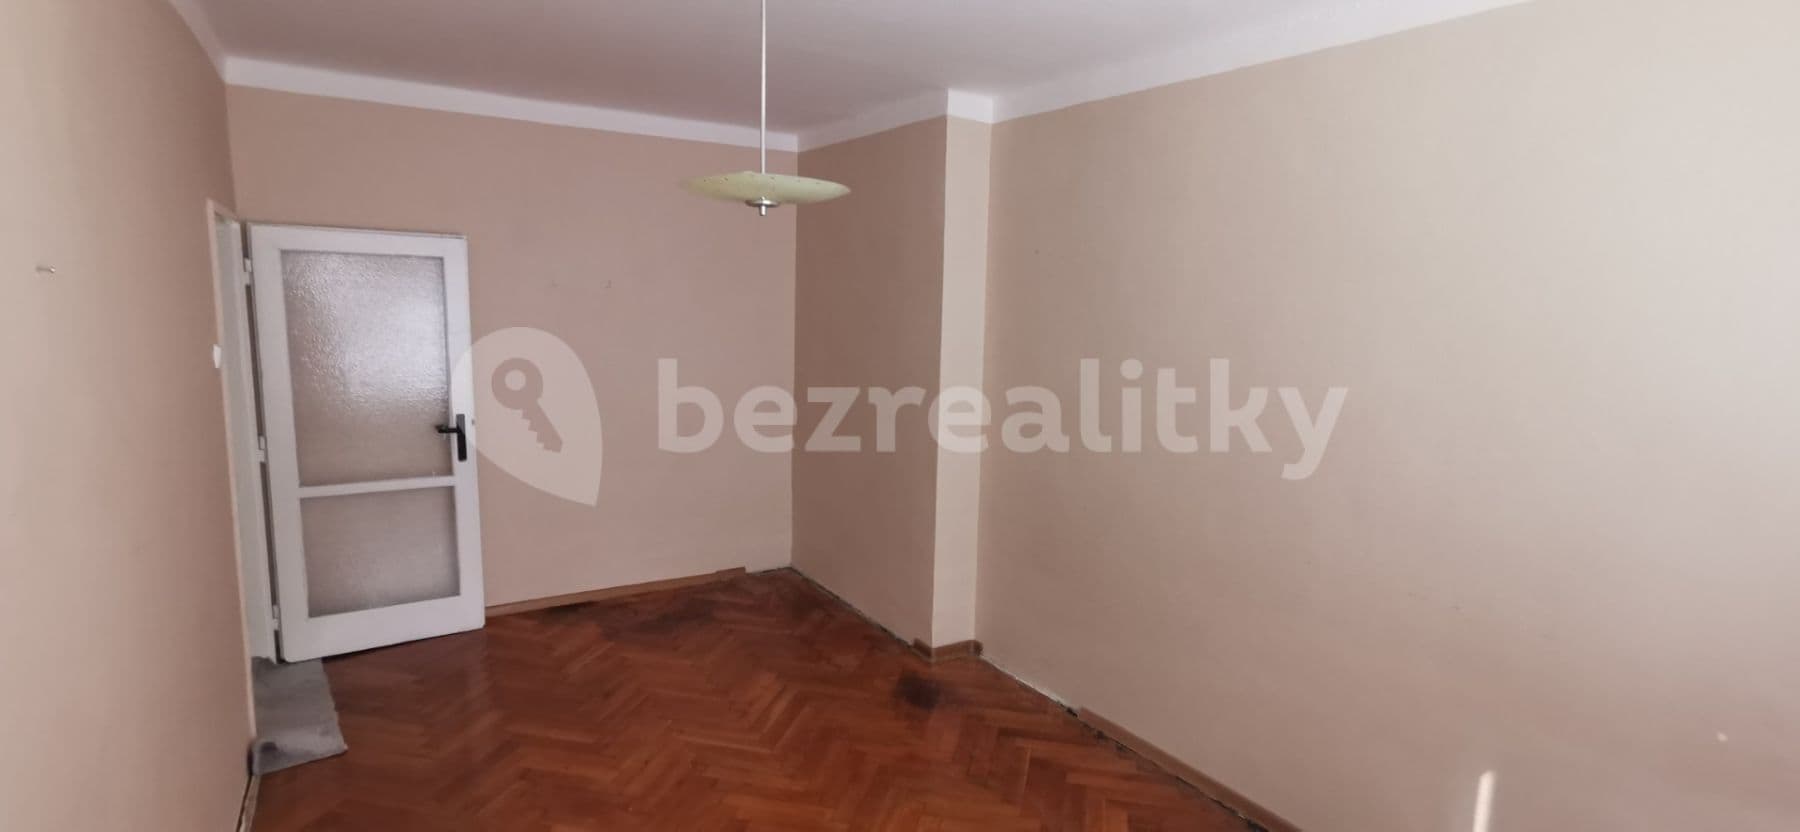 2 bedroom flat to rent, 55 m², Václava Řezáče, Klášterec nad Ohří, Ústecký Region